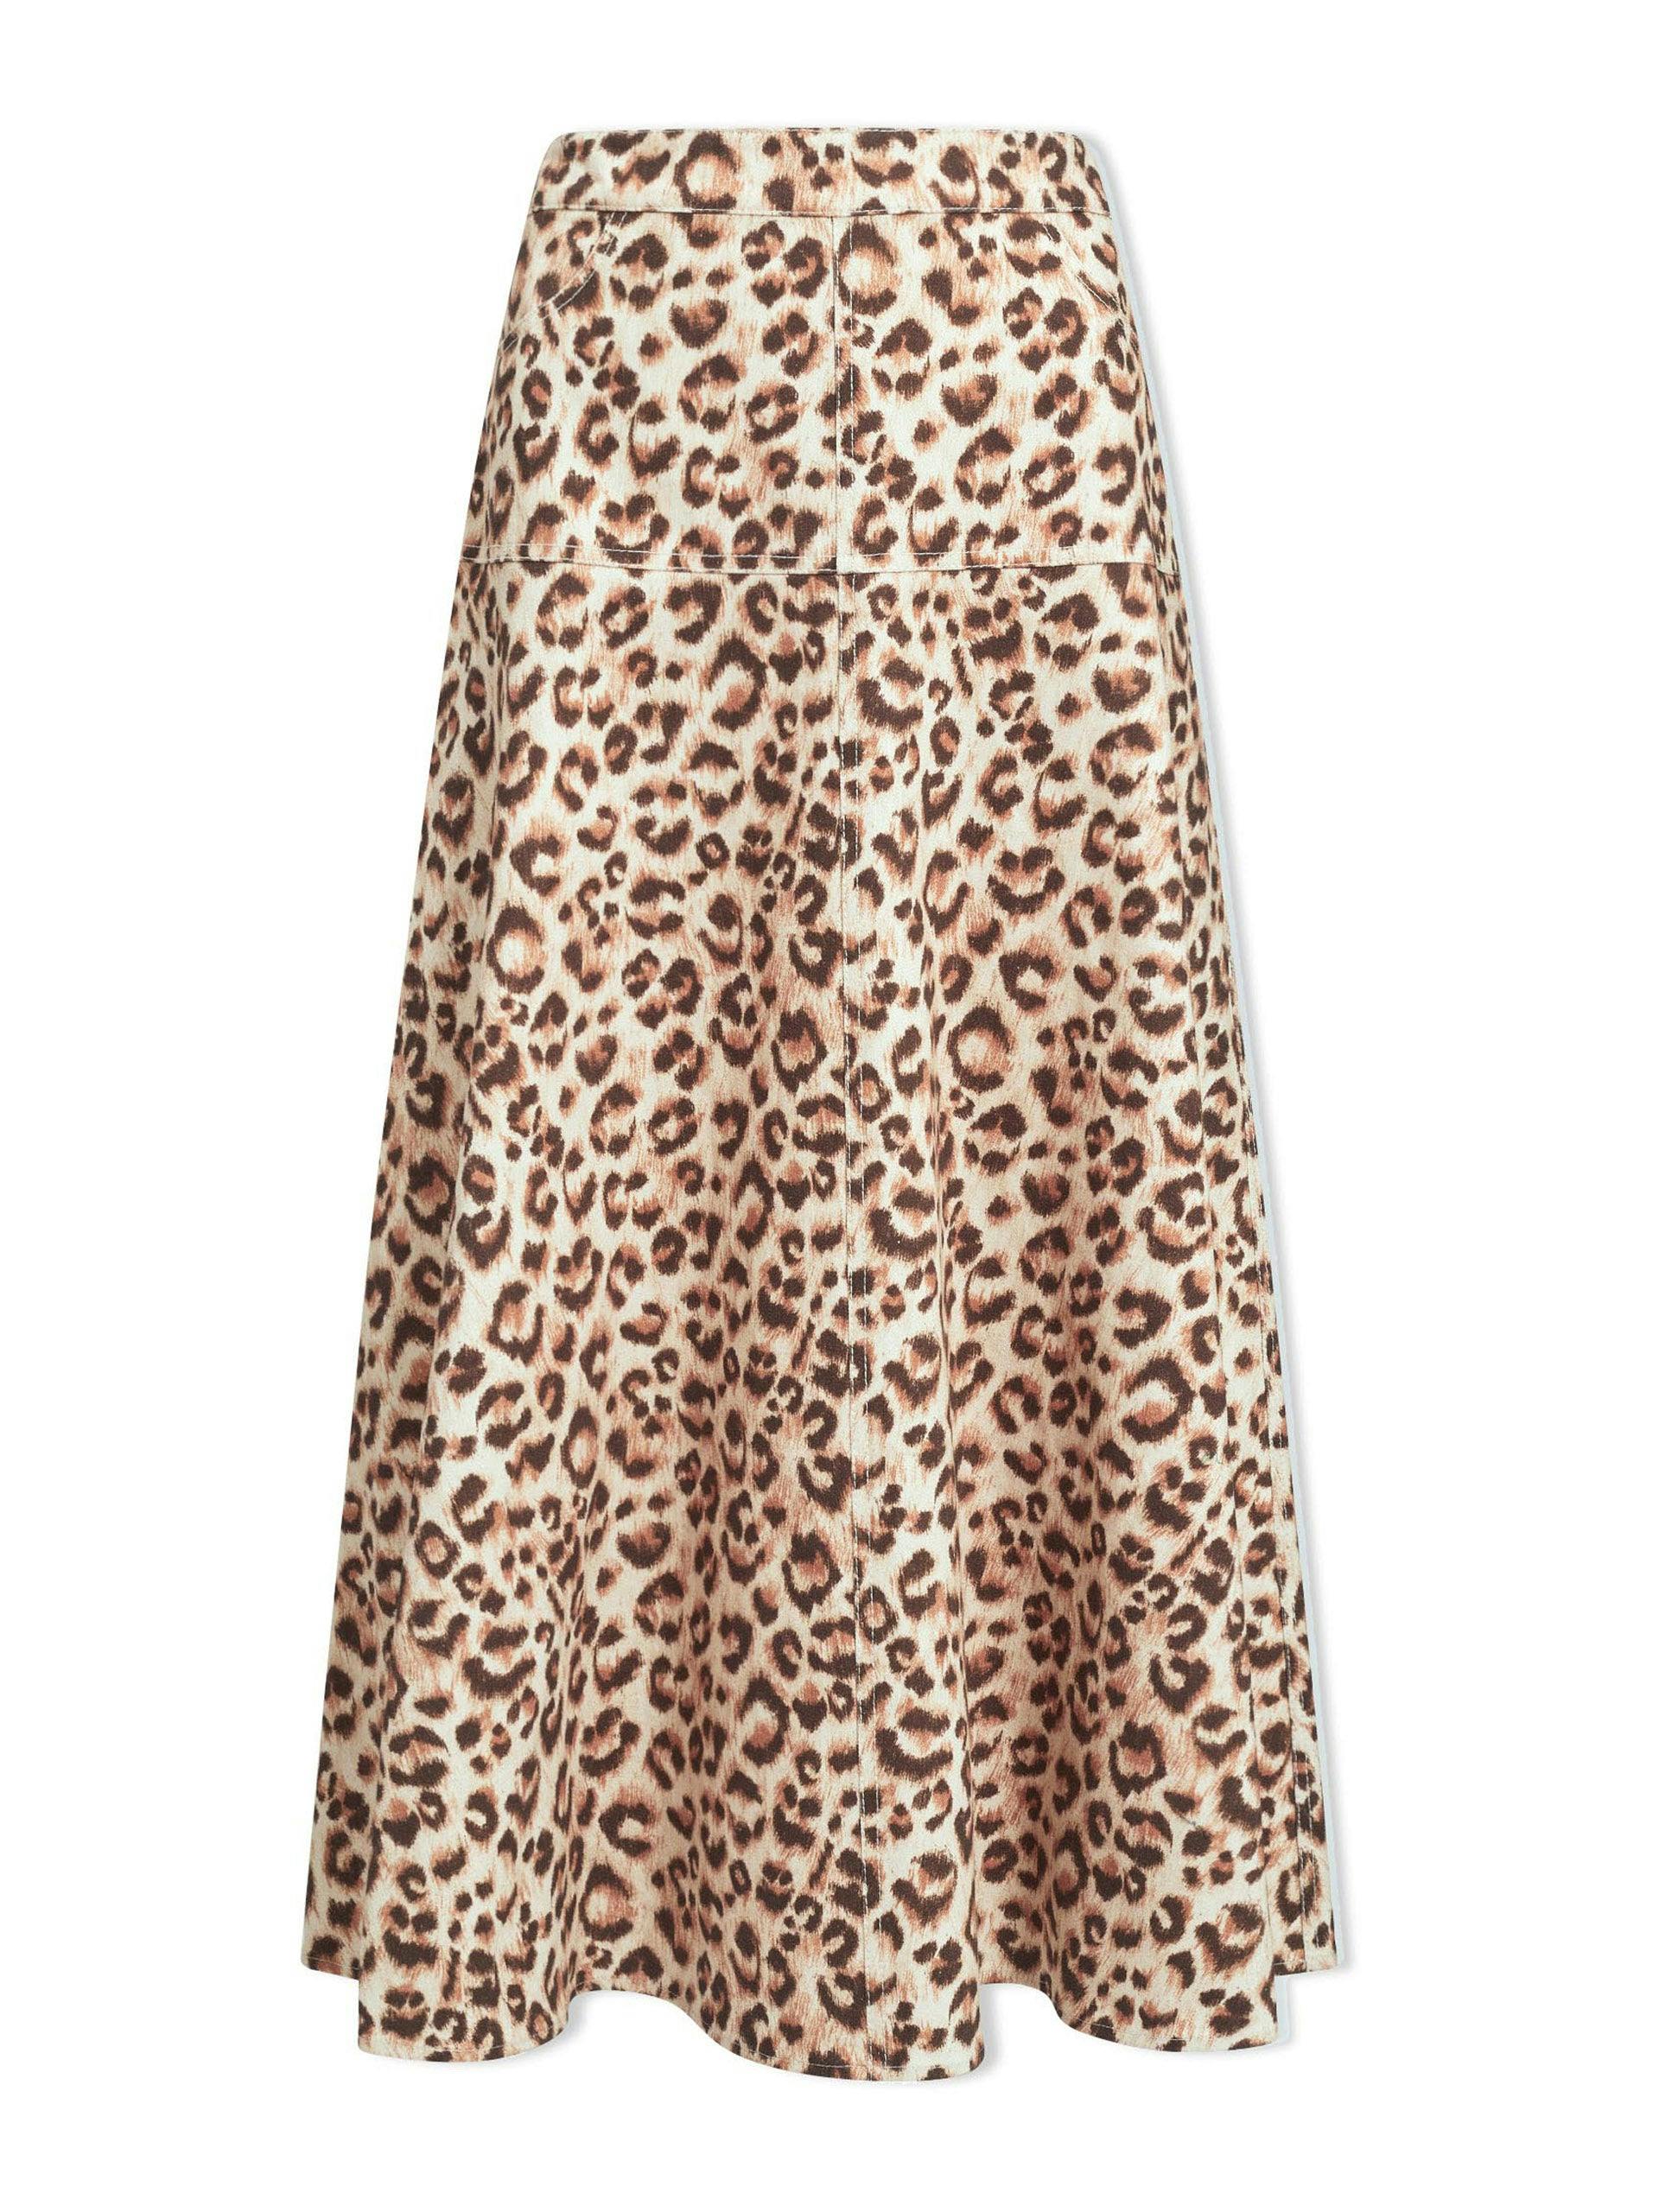 Sierra leopard print cotton skirt